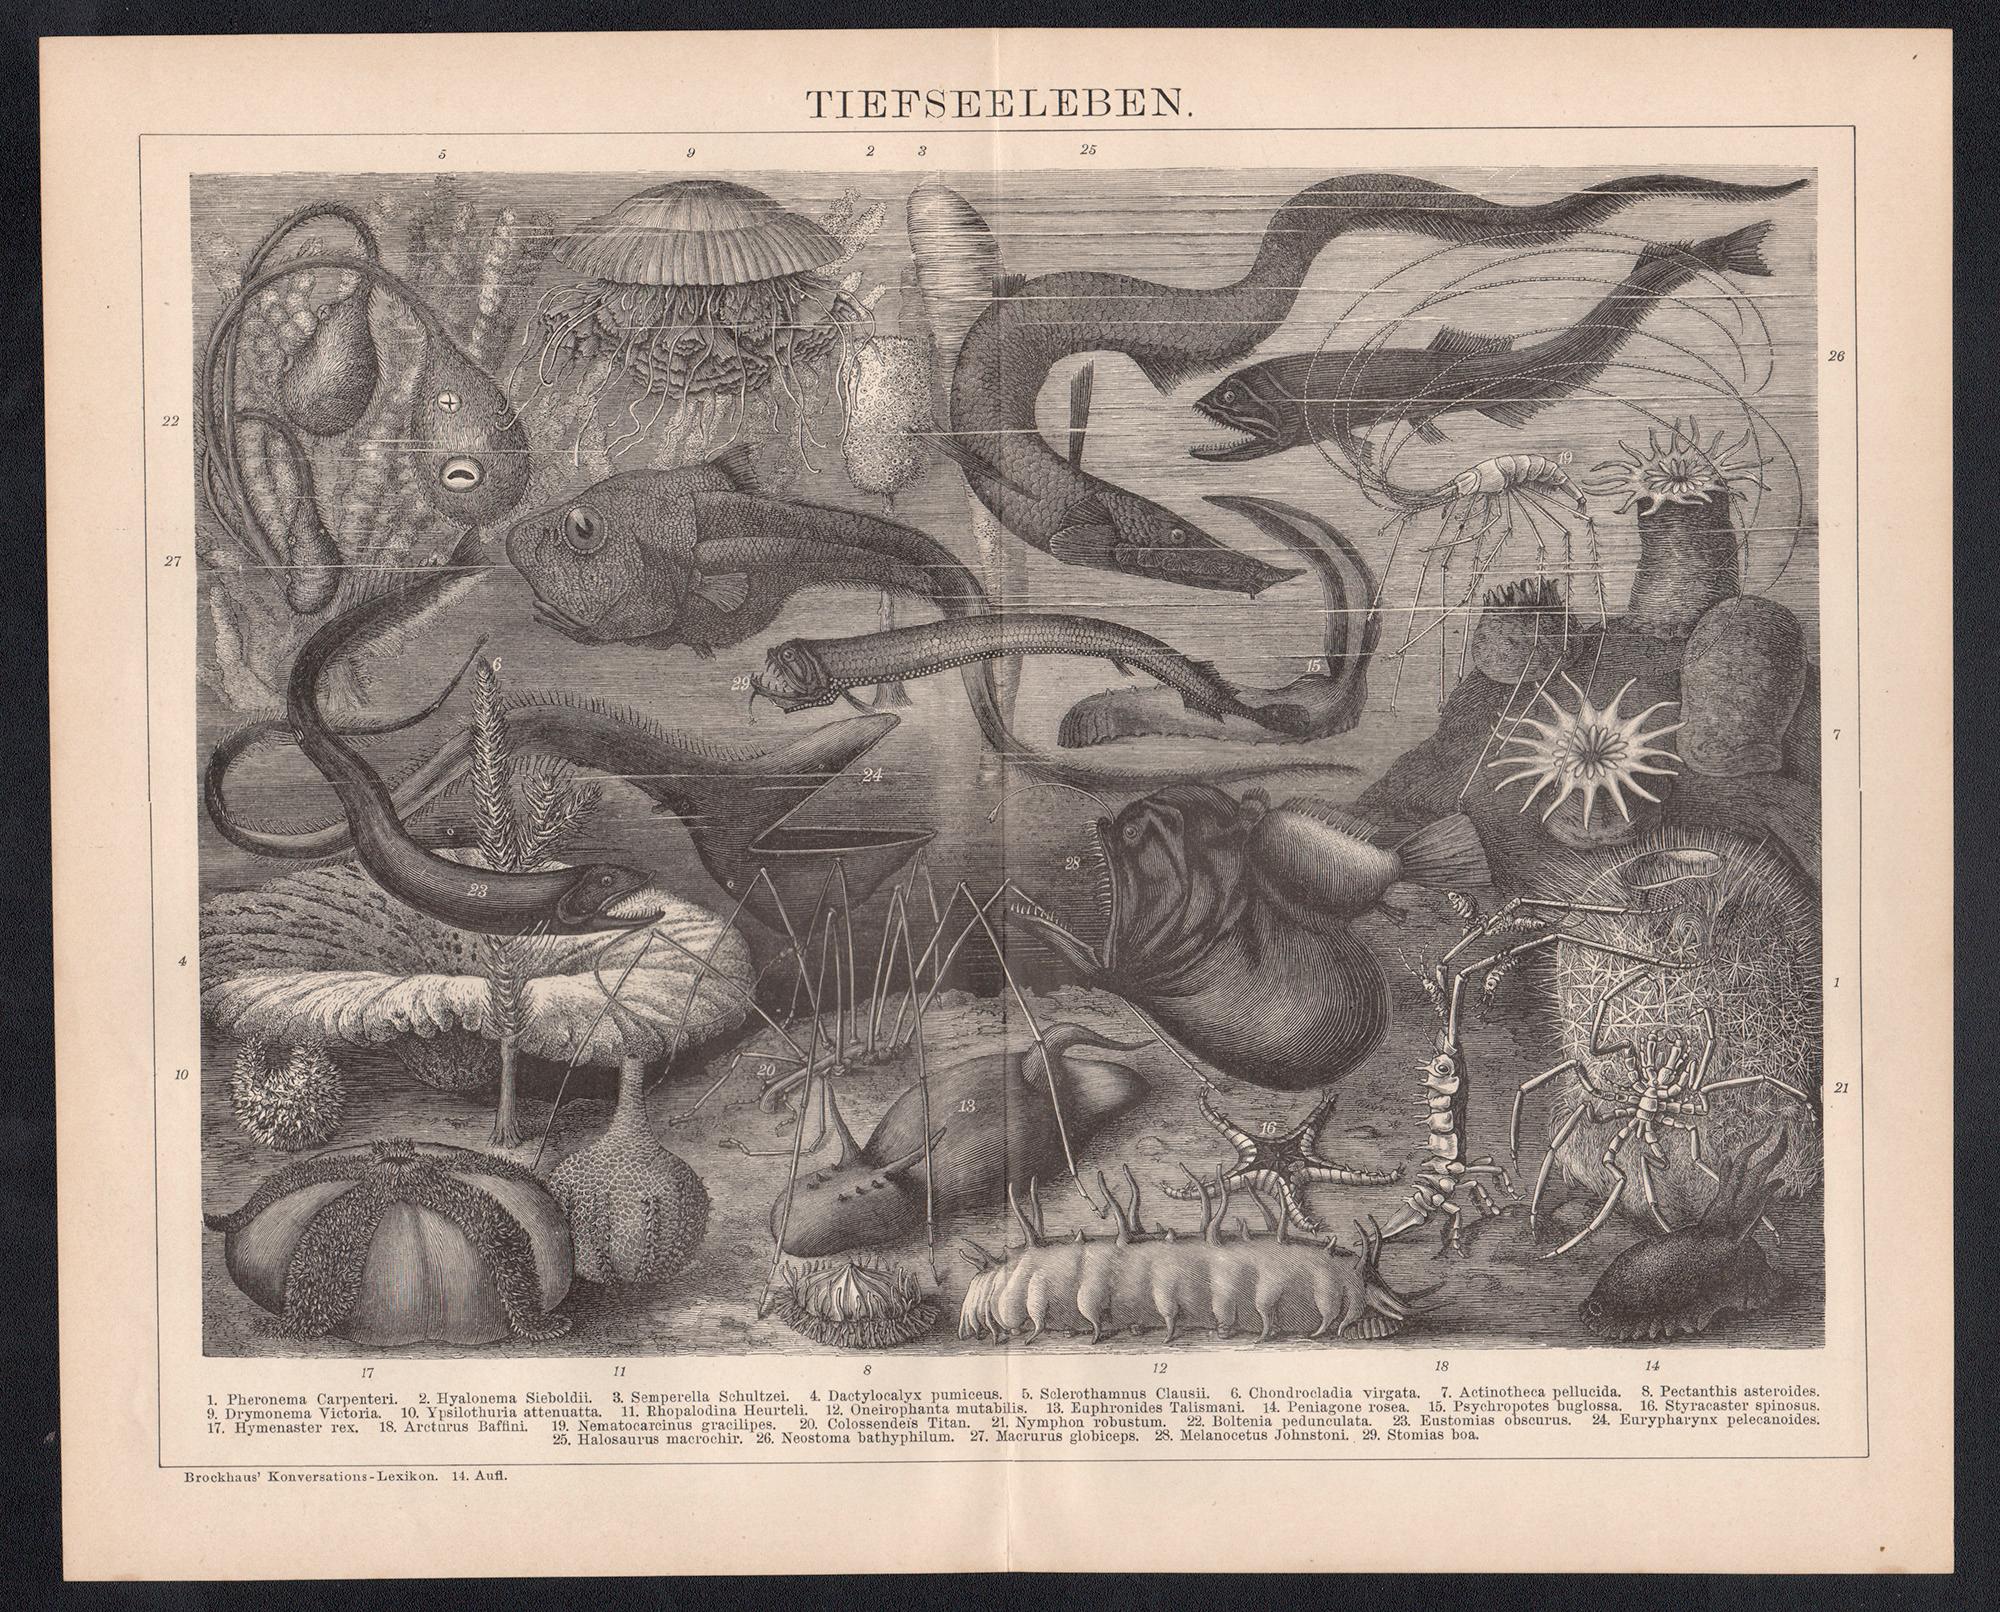 Tiefseeleben (Deep Sea Life), German antique underwater sea life engraving - Print by Unknown